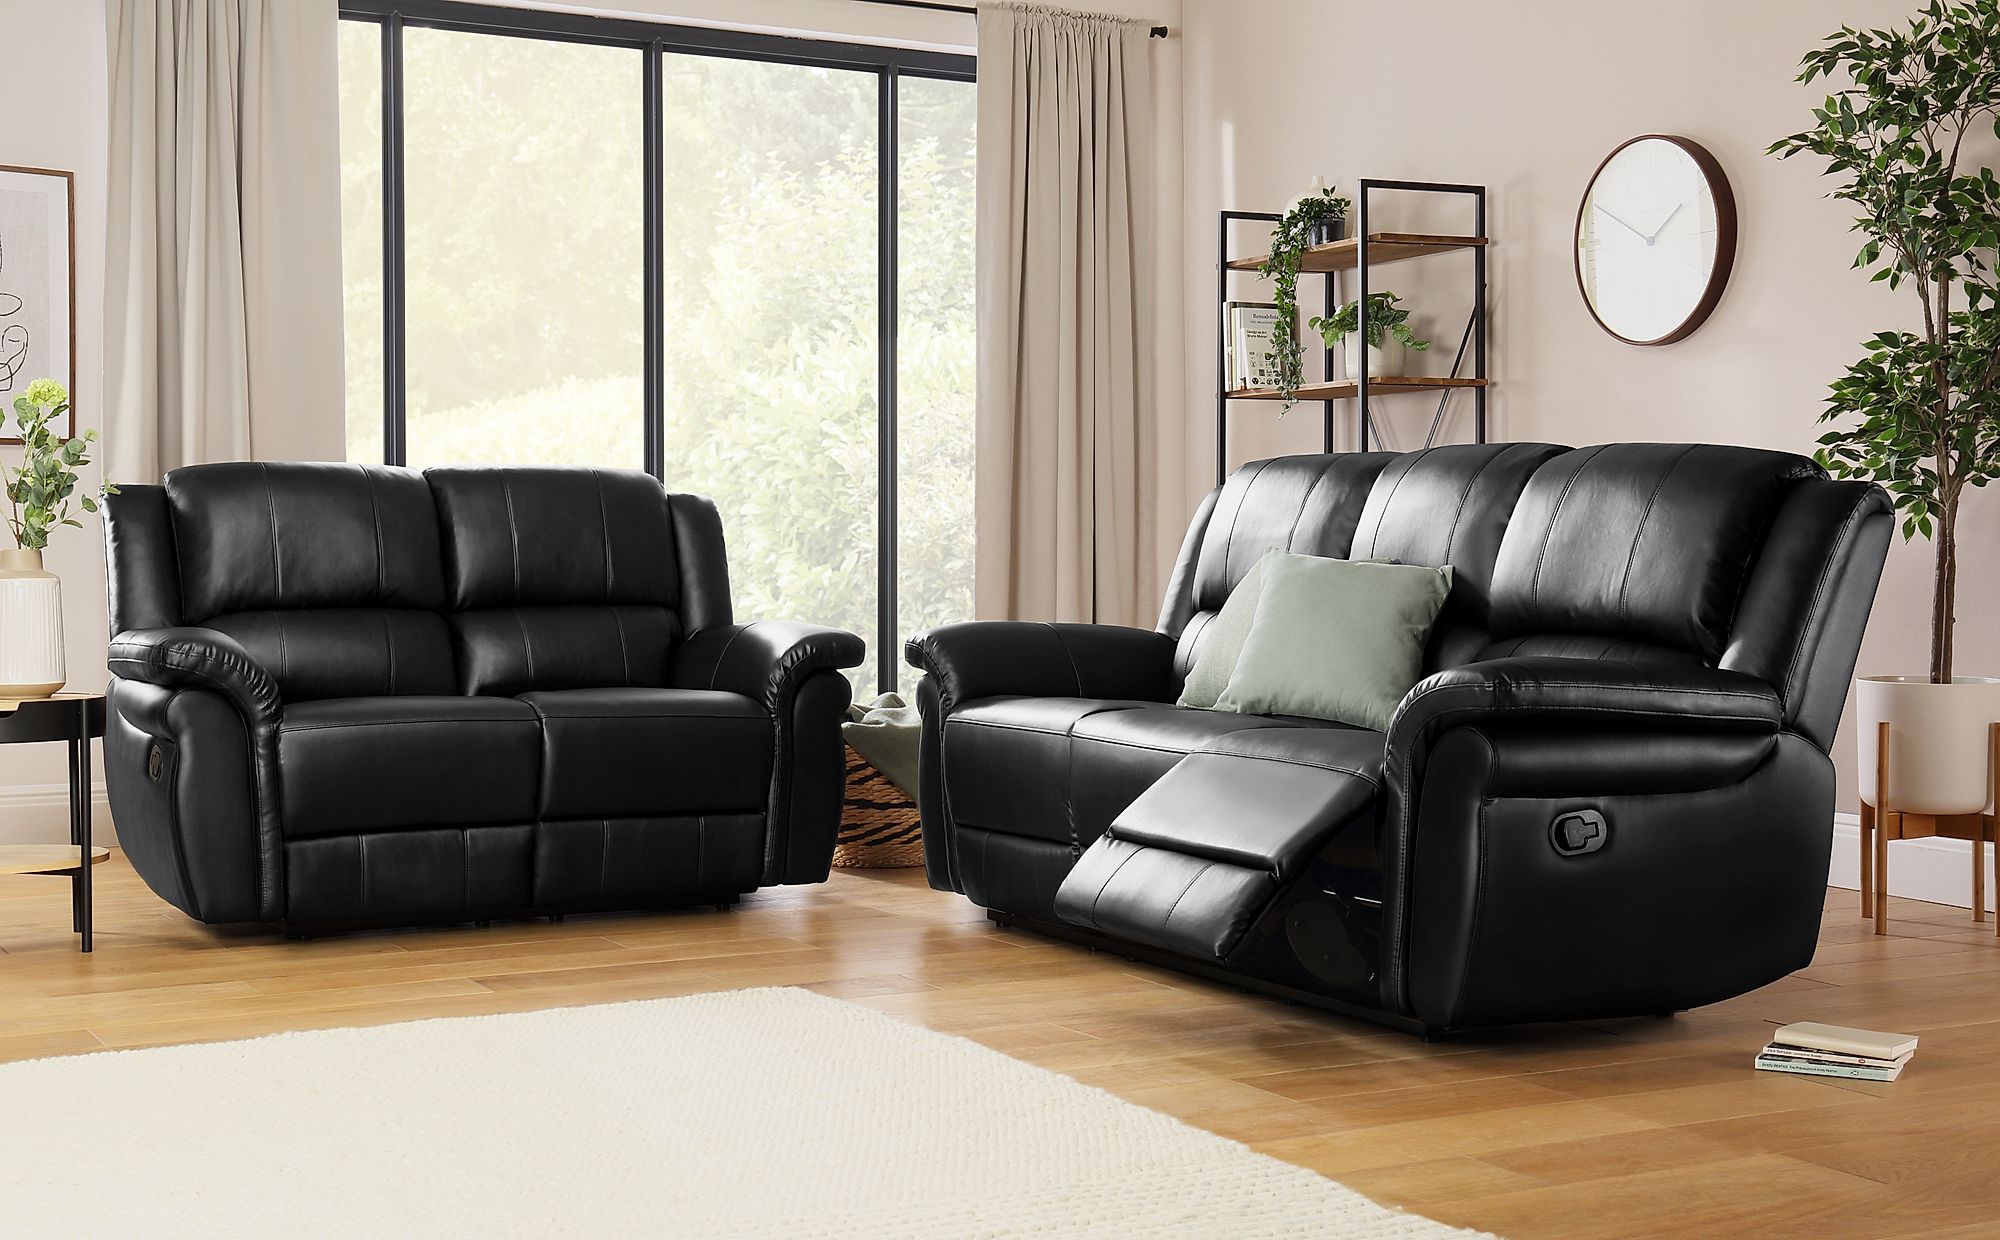 3 2 black leather recliner sofa